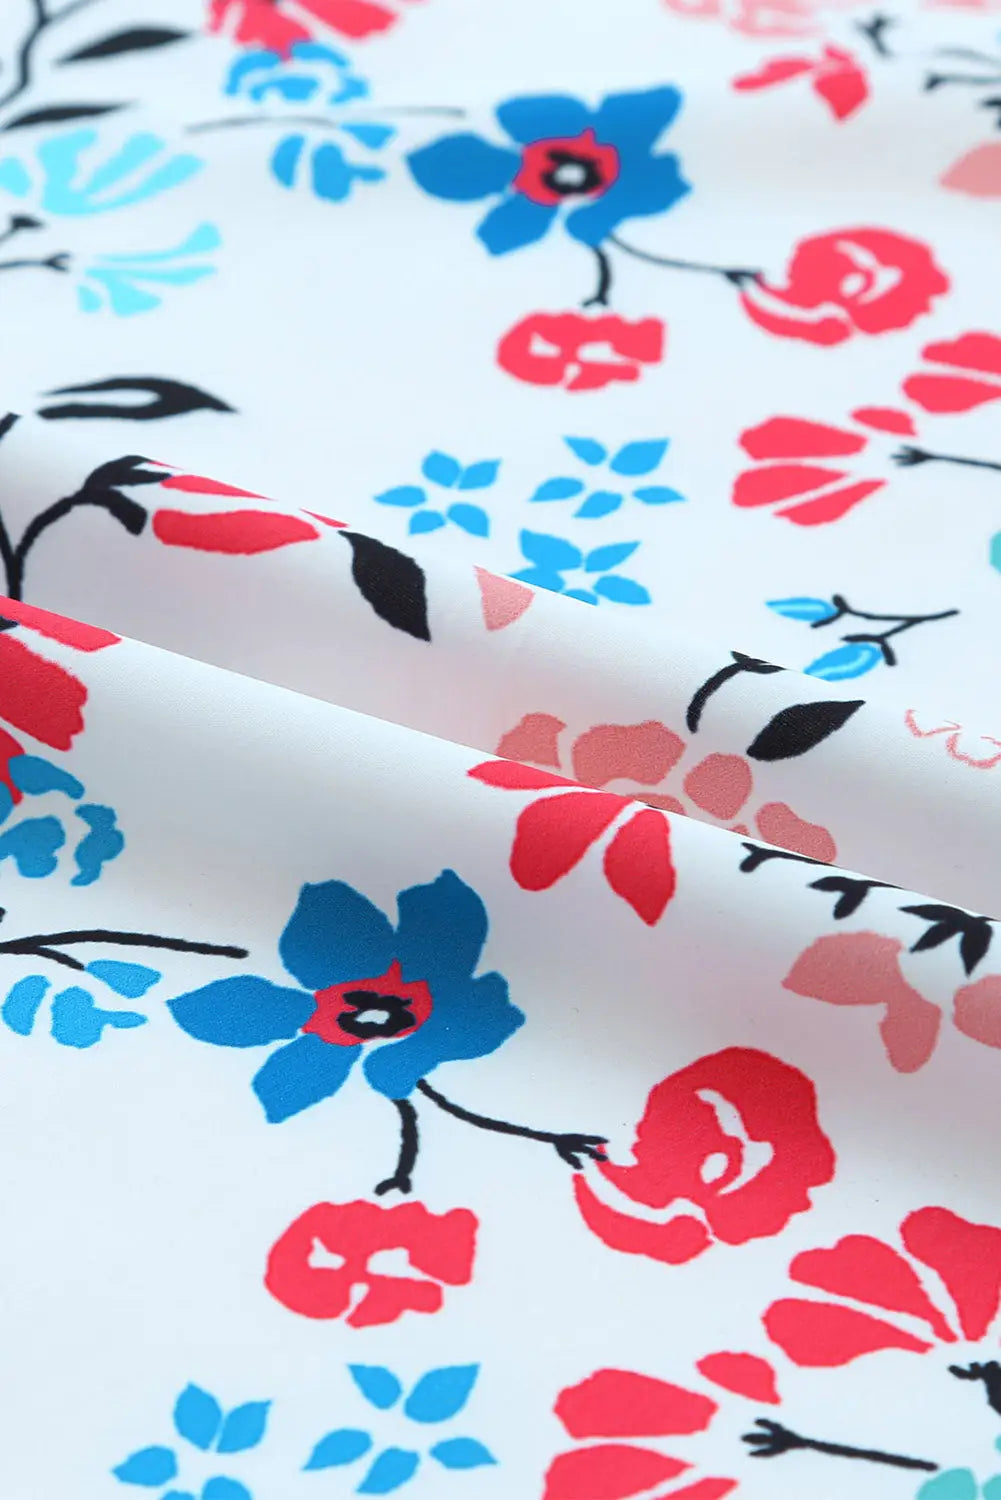 Multicolor long sleeve tassel tie floral kimono - outerwear